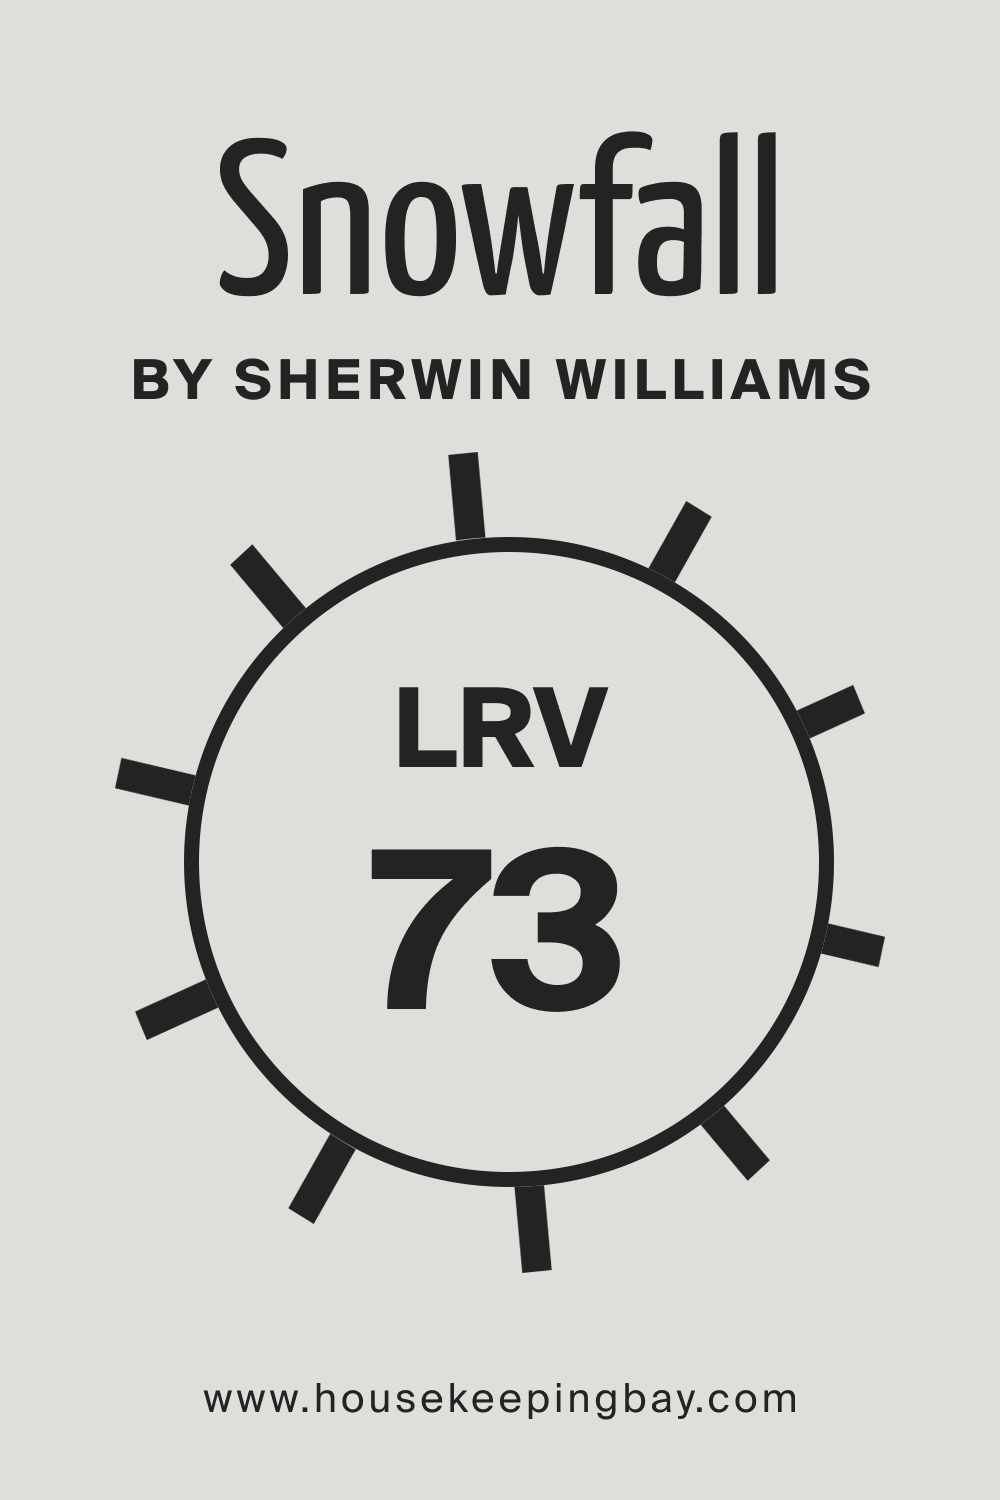 Snowfall by Sherwin Williams. LRV – 73